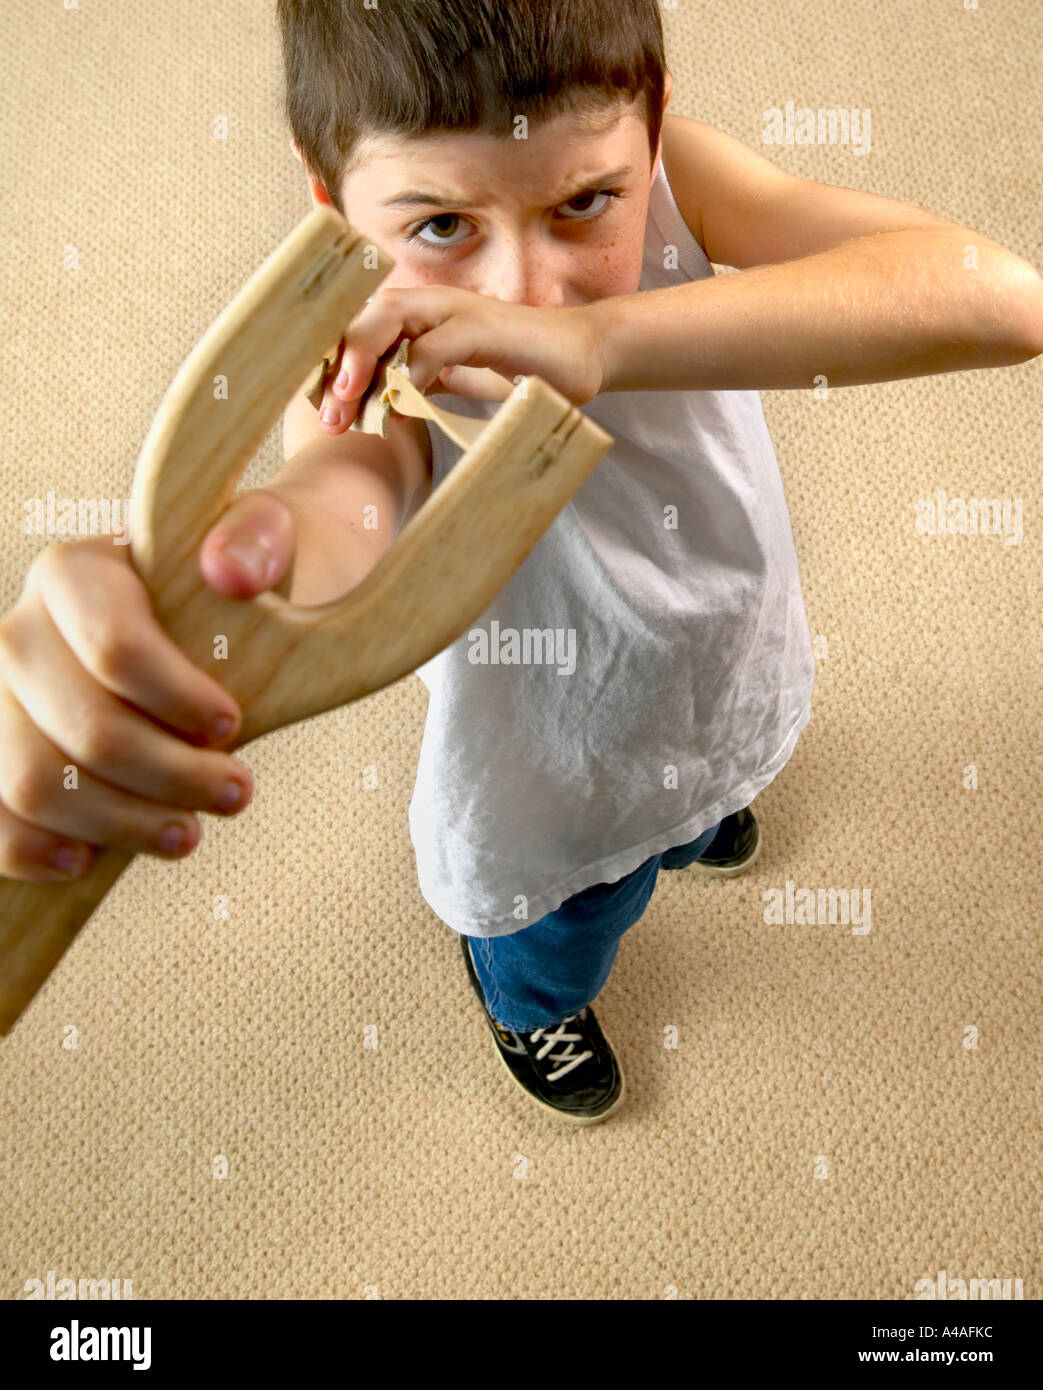 angry boy pointing slingshot at camera Stock Photo